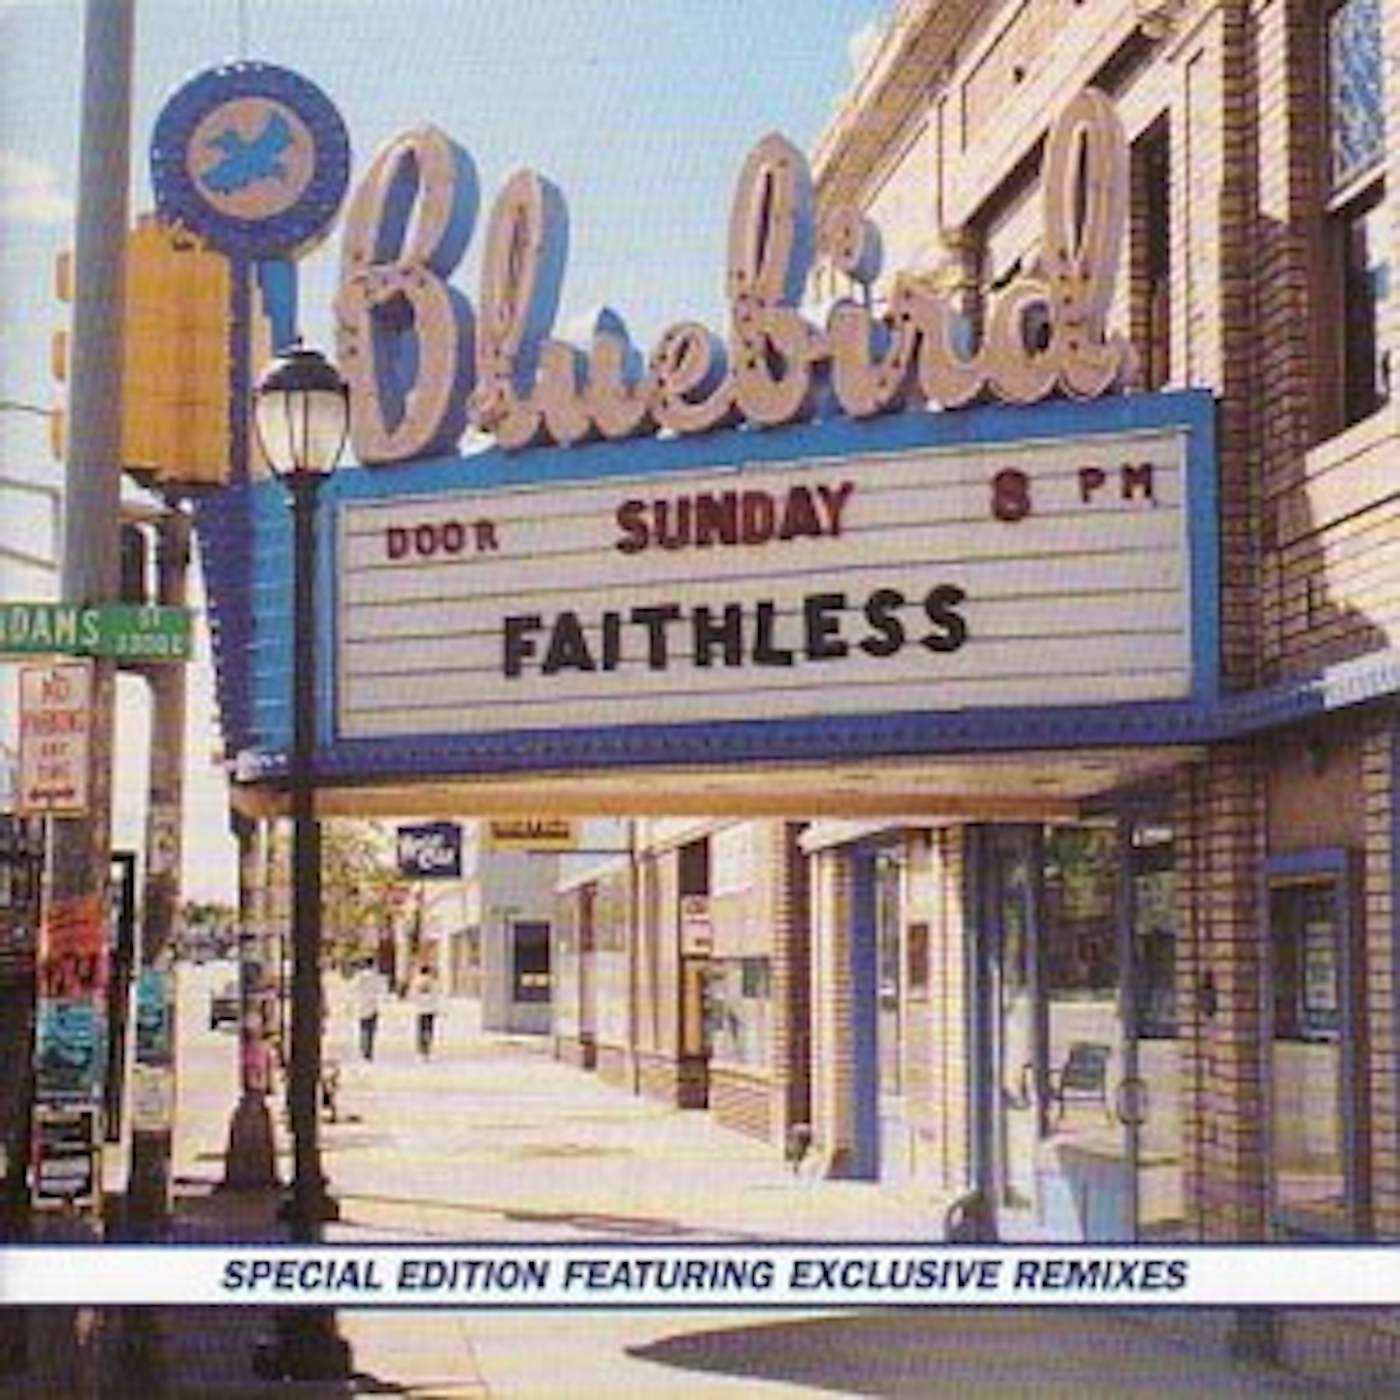 Faithless SUNDAY 8 PM Vinyl Record